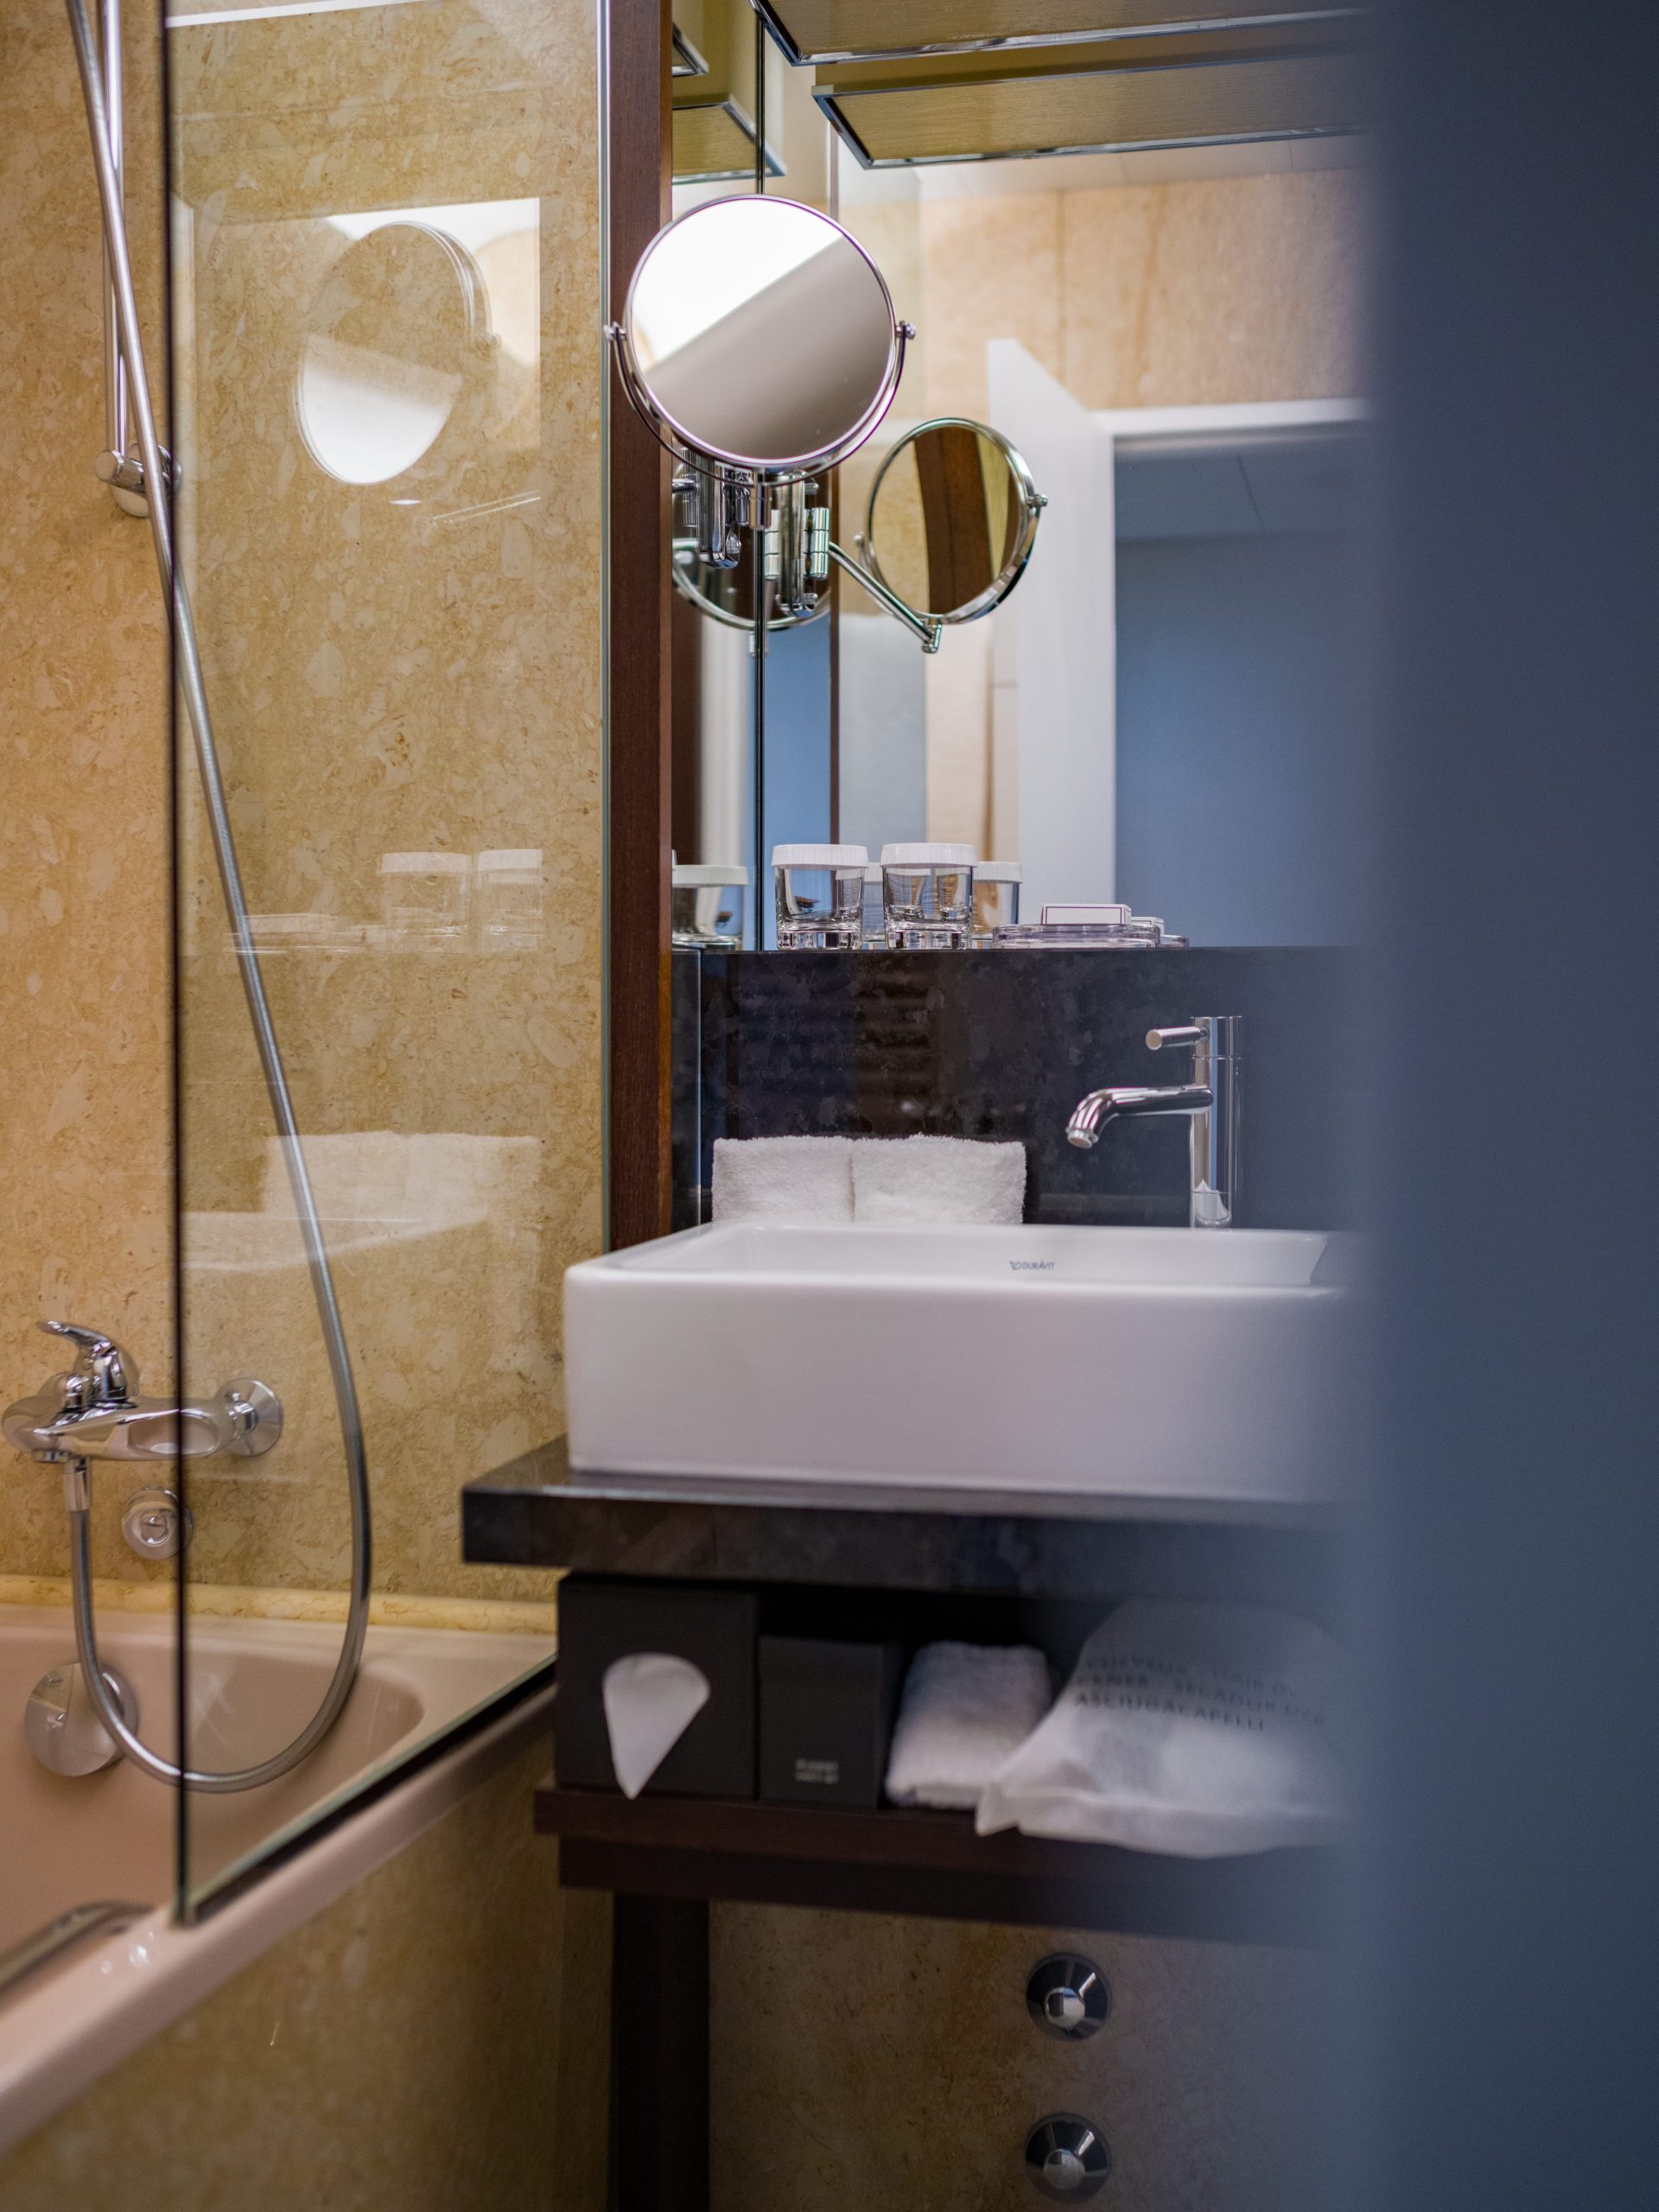 InterContinental-Geneve-Classic bathroom (1)